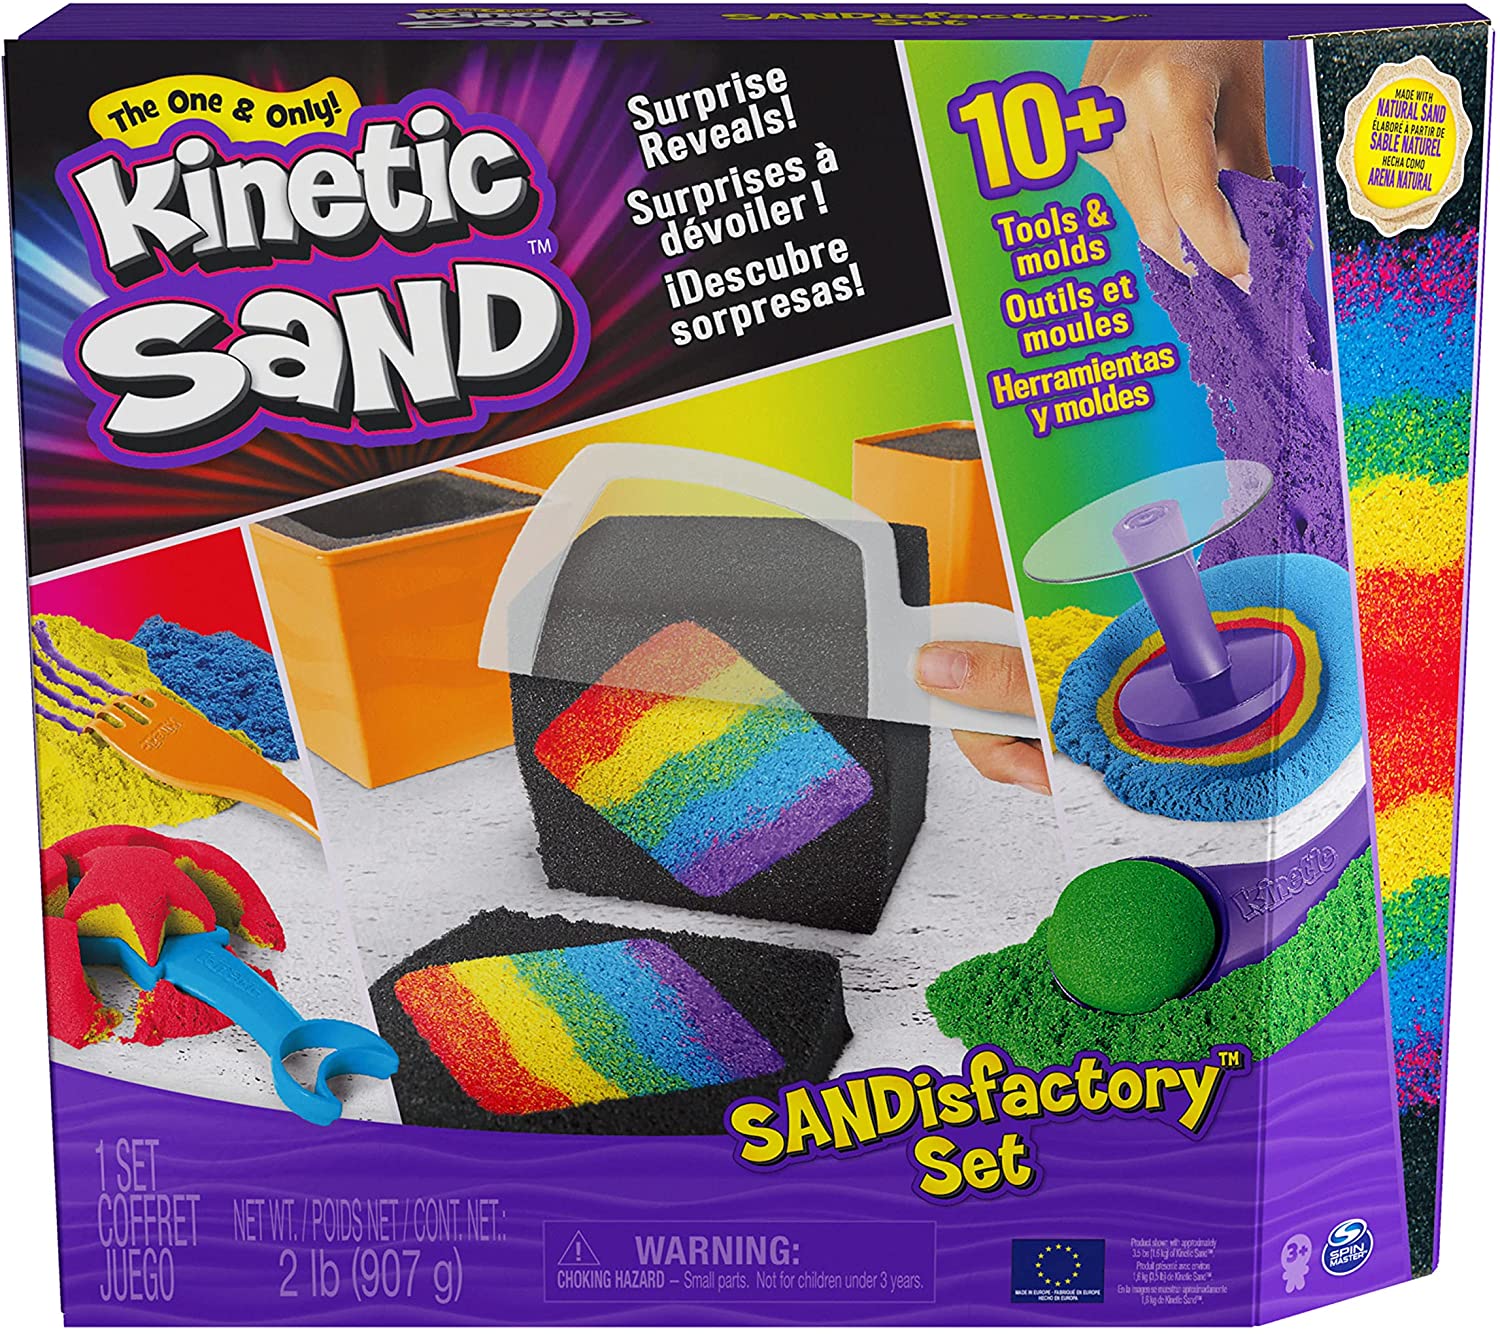 Kinetic Sand Sandisfactory set